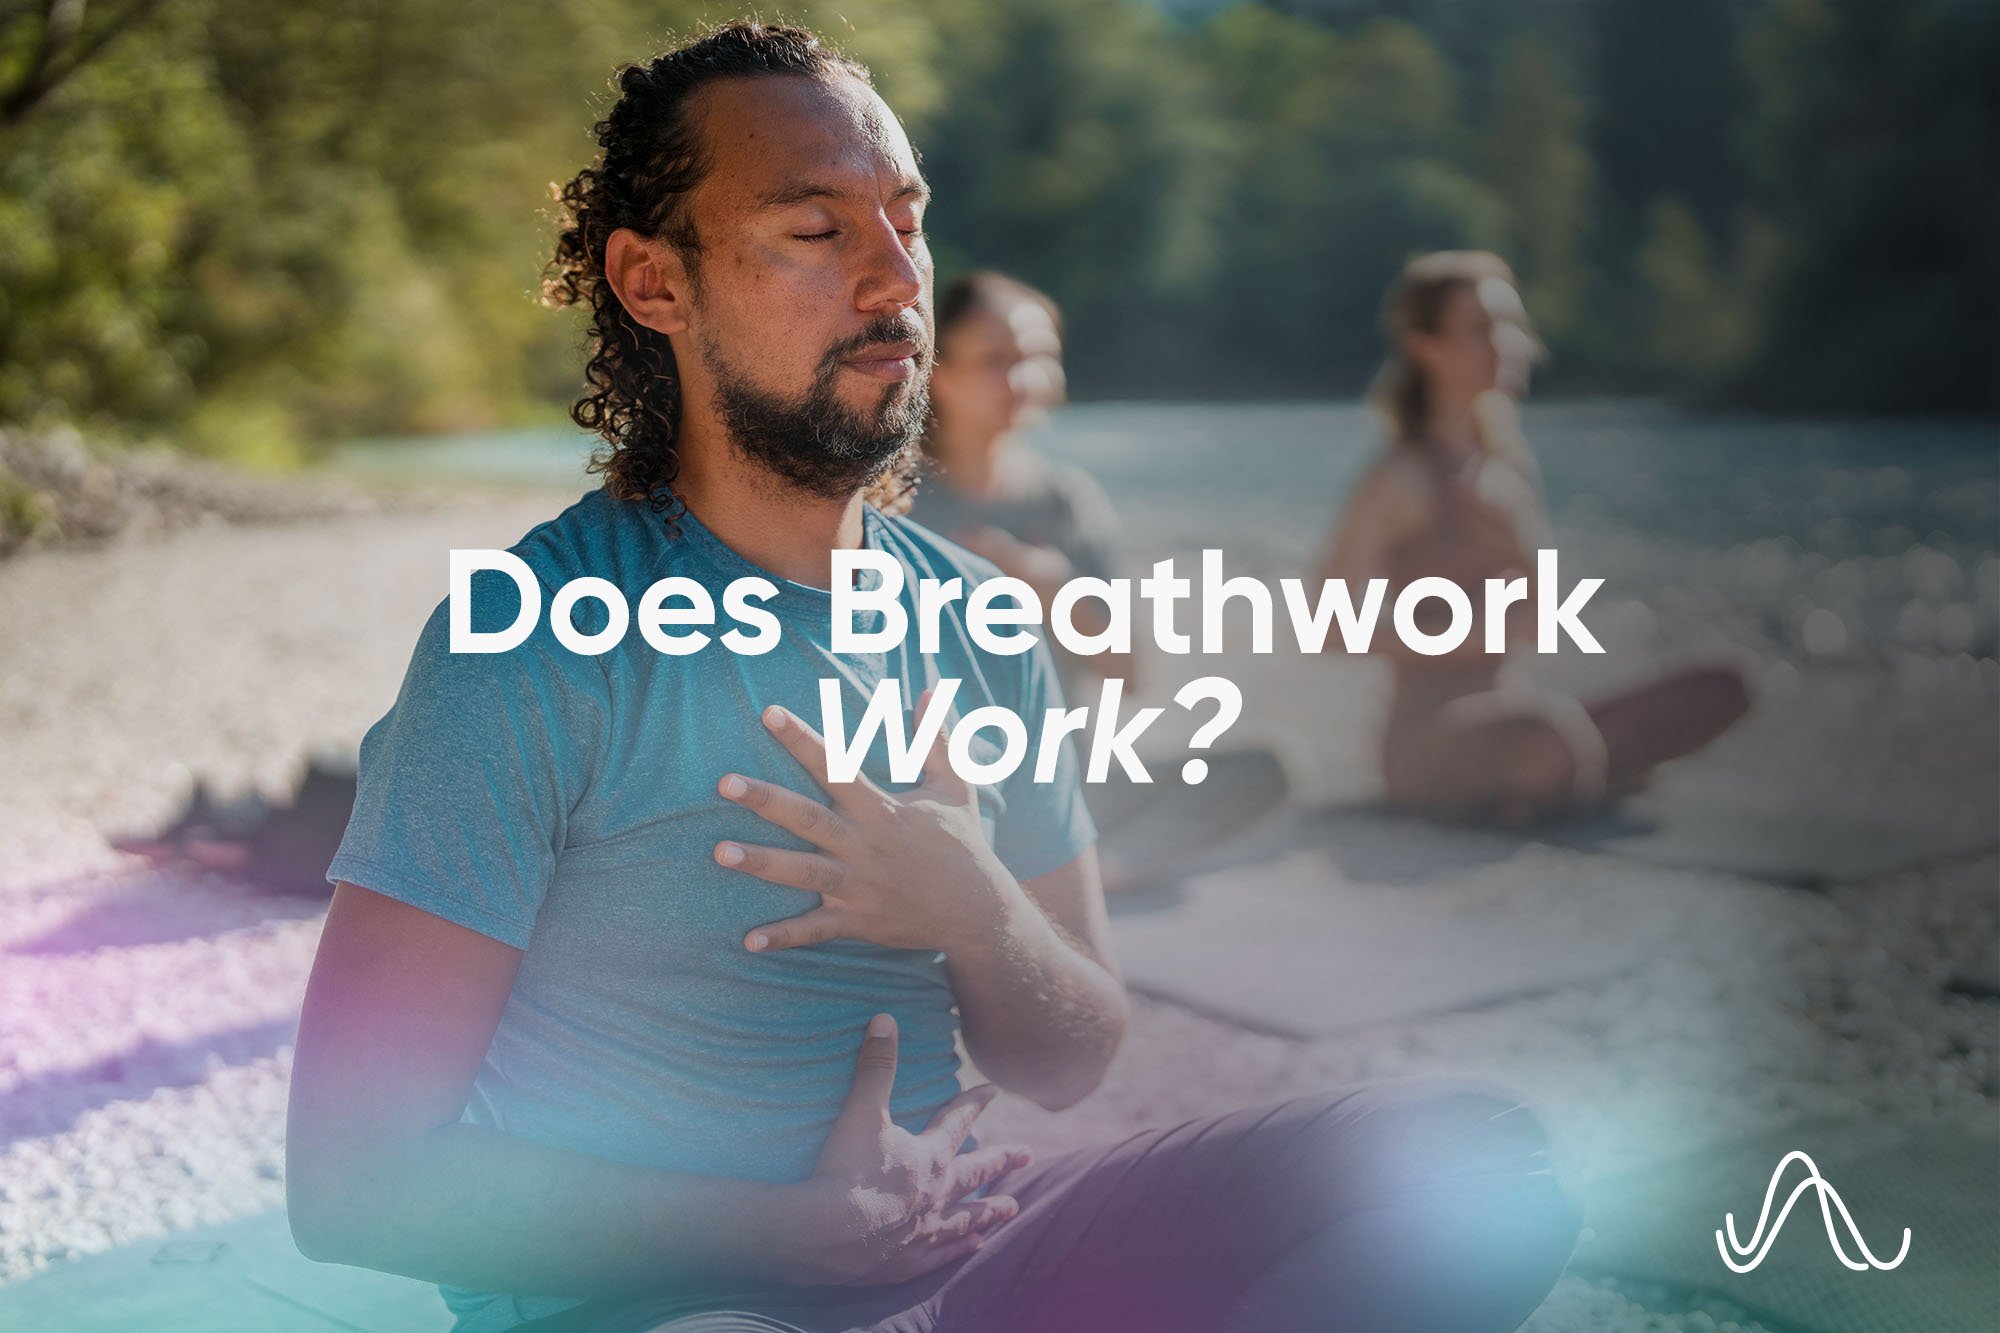 How Does Breathwork Work